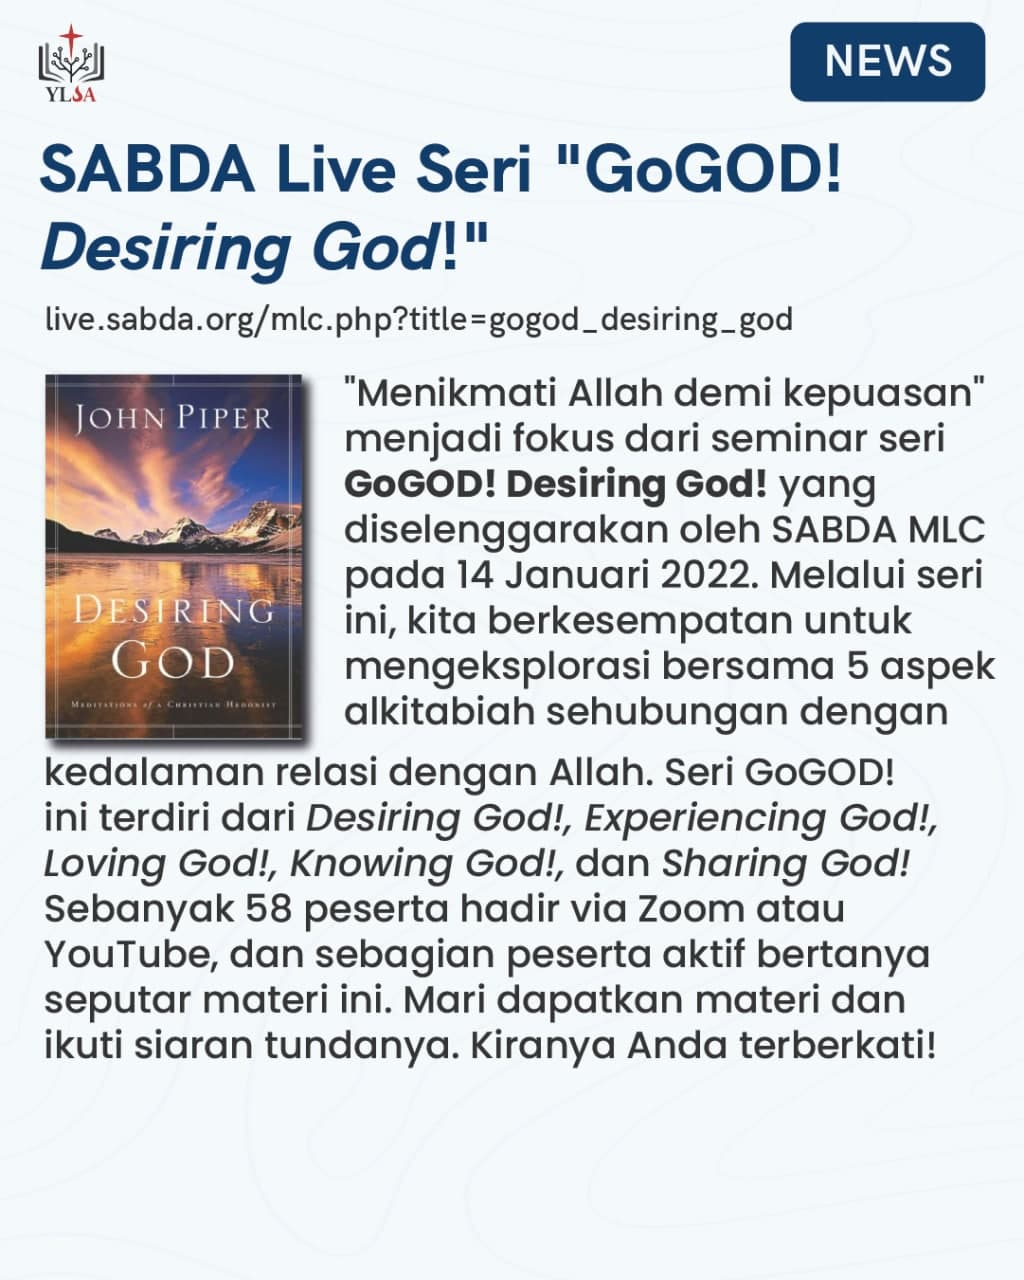 "Menikmati Allah demi kepuasan" menjadi fokus dari seminar seri "GoGOD! Desiring God!" yang diselenggarakan oleh SABDA MLC pada 14 Januari 2022.